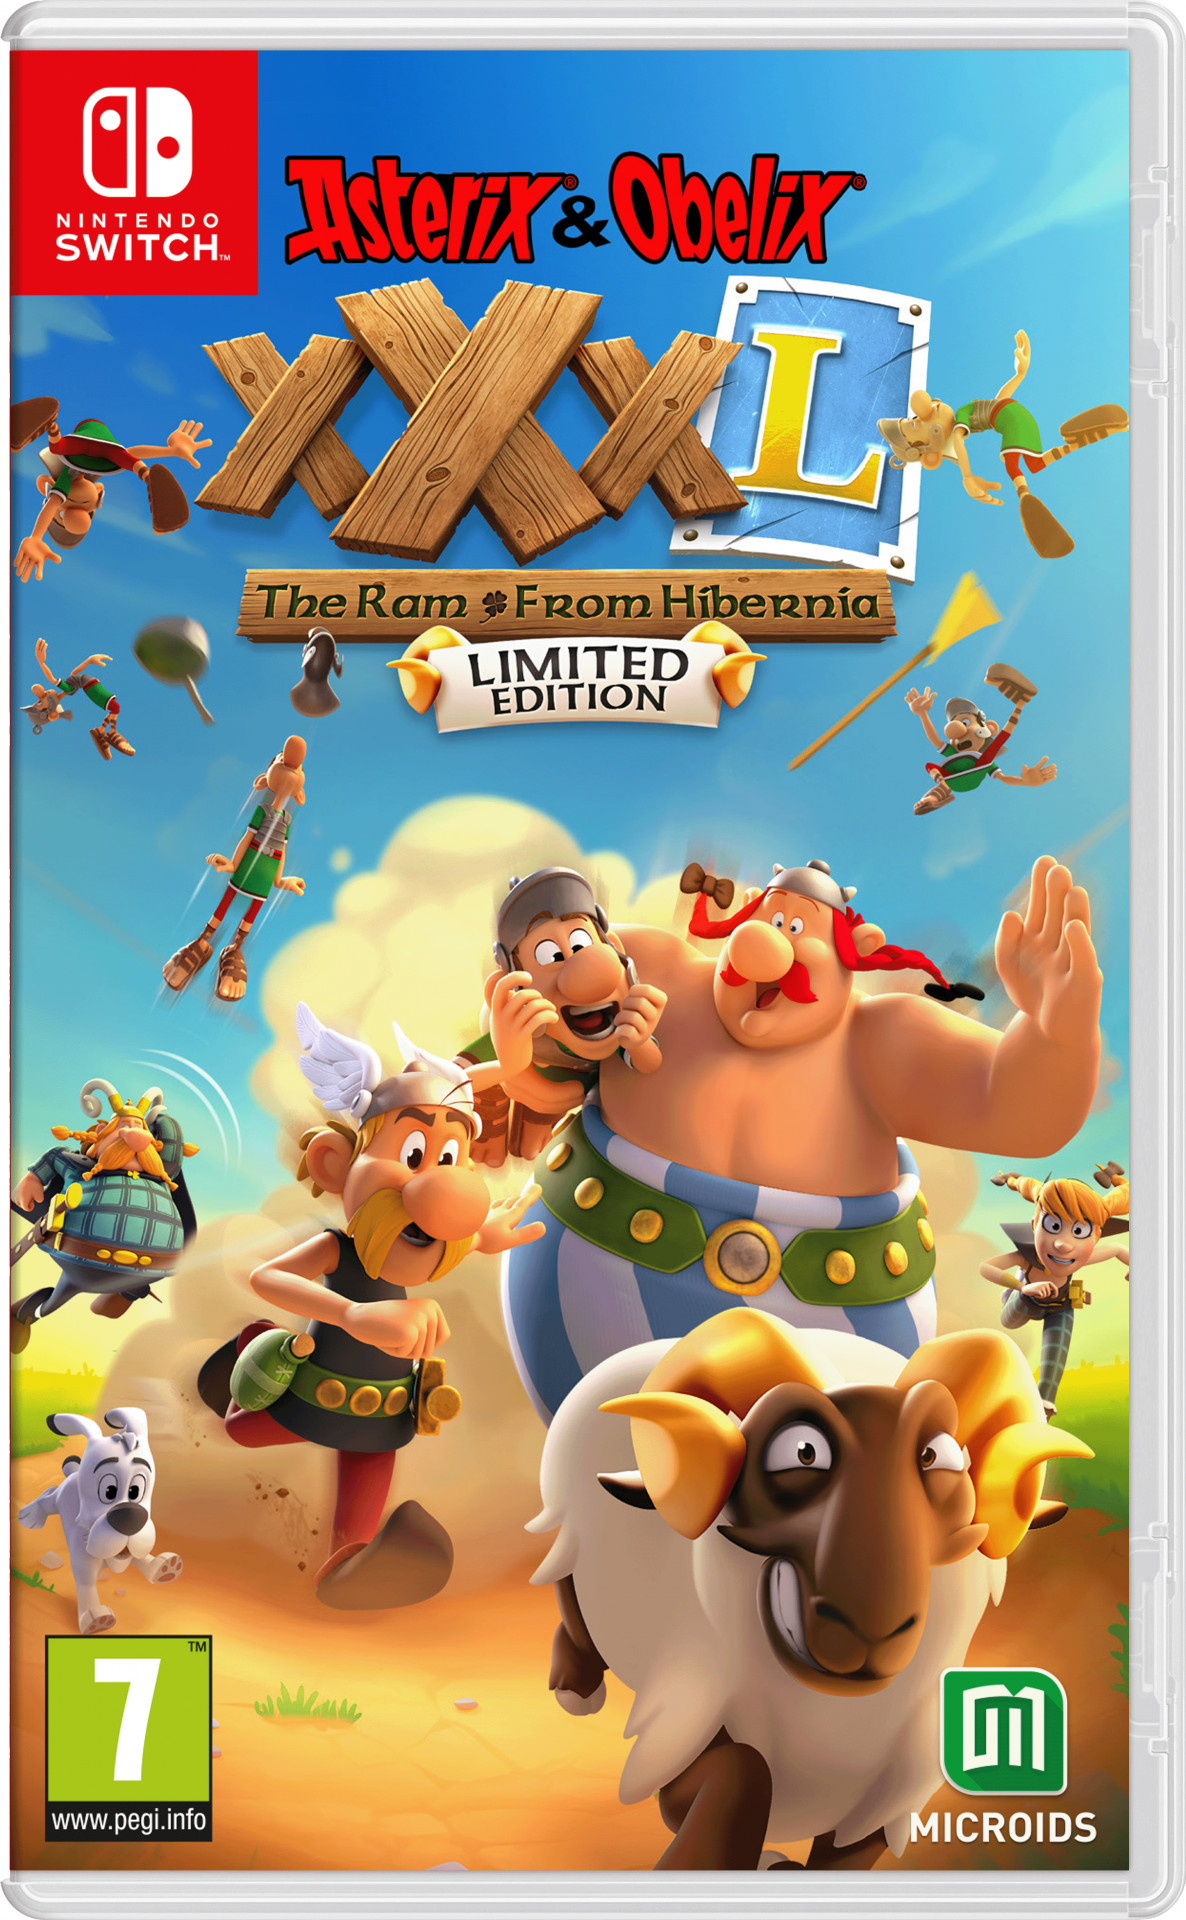 Asterix & Obelix XXXL the Ram From Hibernia Limited Edition - Nintendo Switch